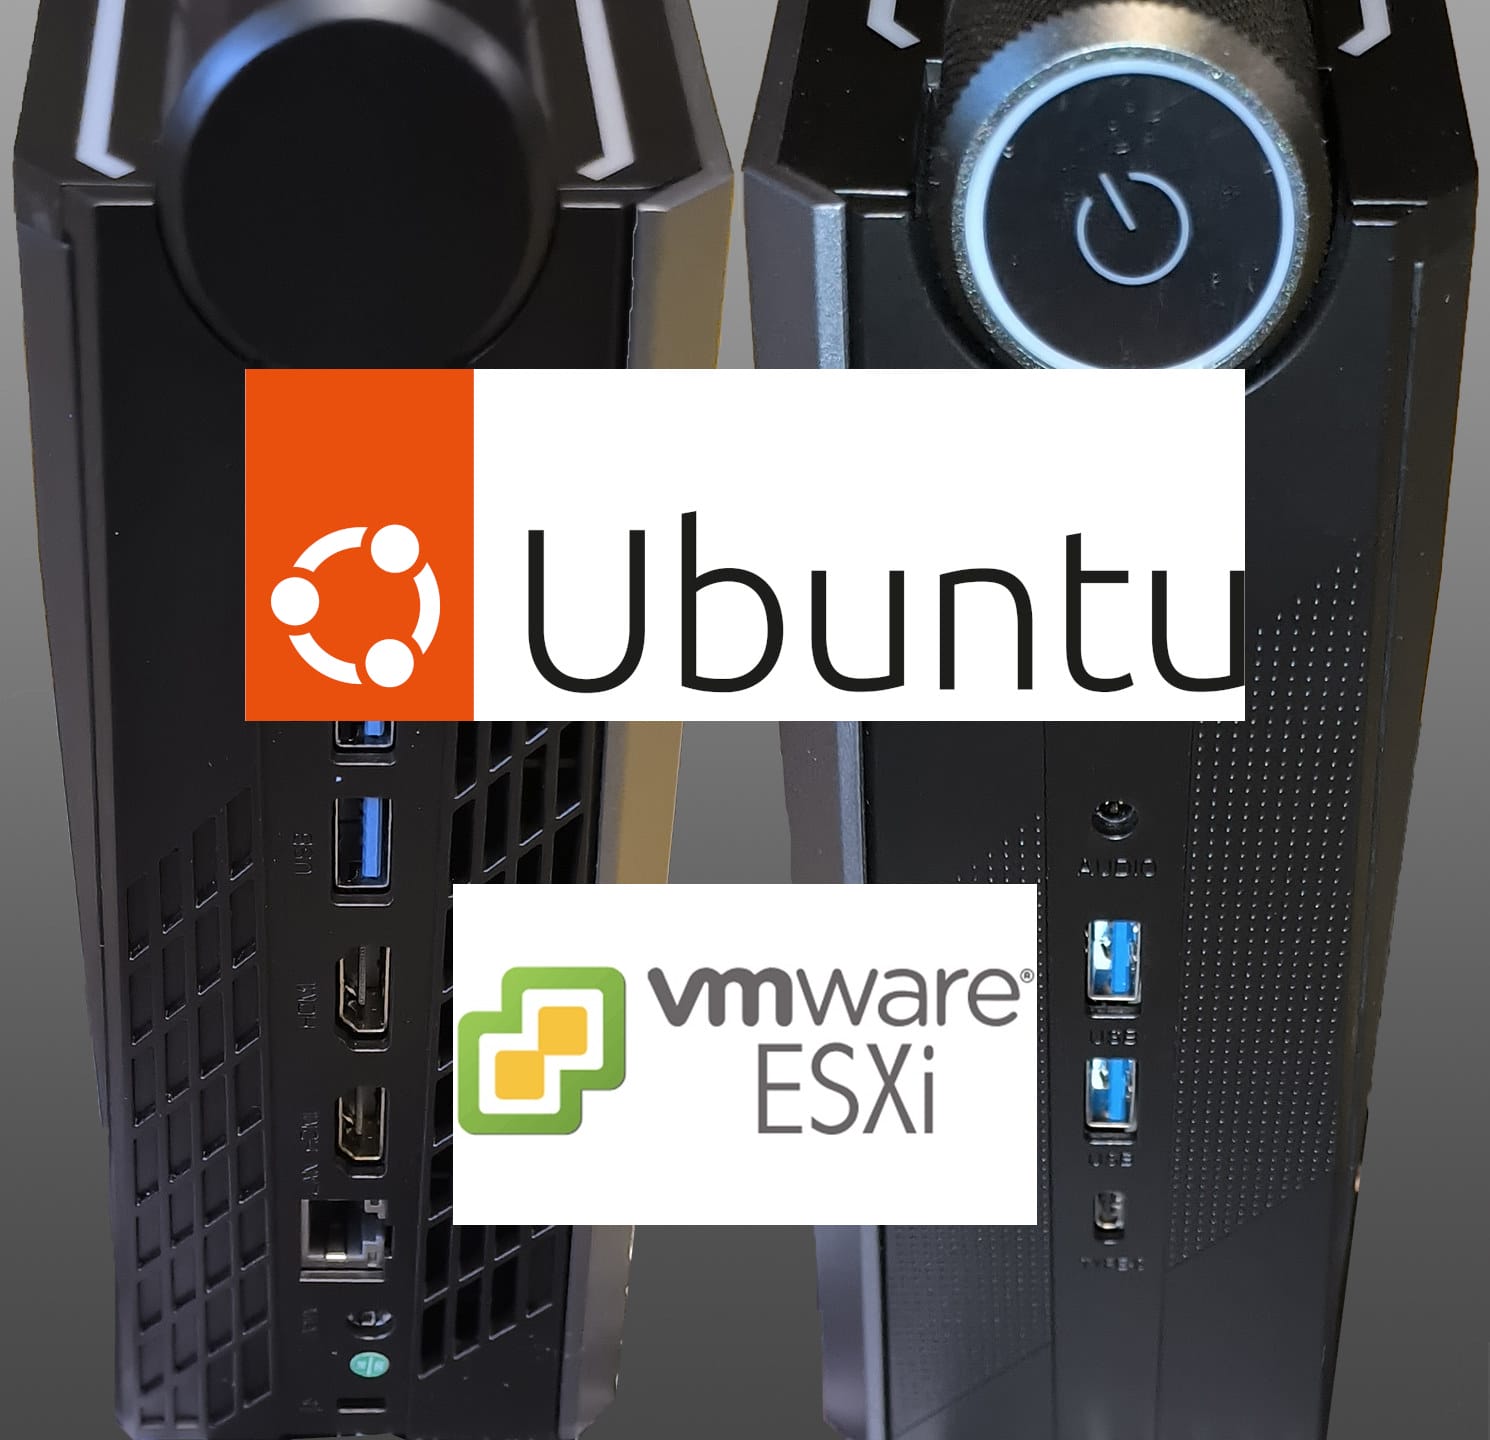 Chatreey AM08 Pro Review Ubuntu VMWare ESXi